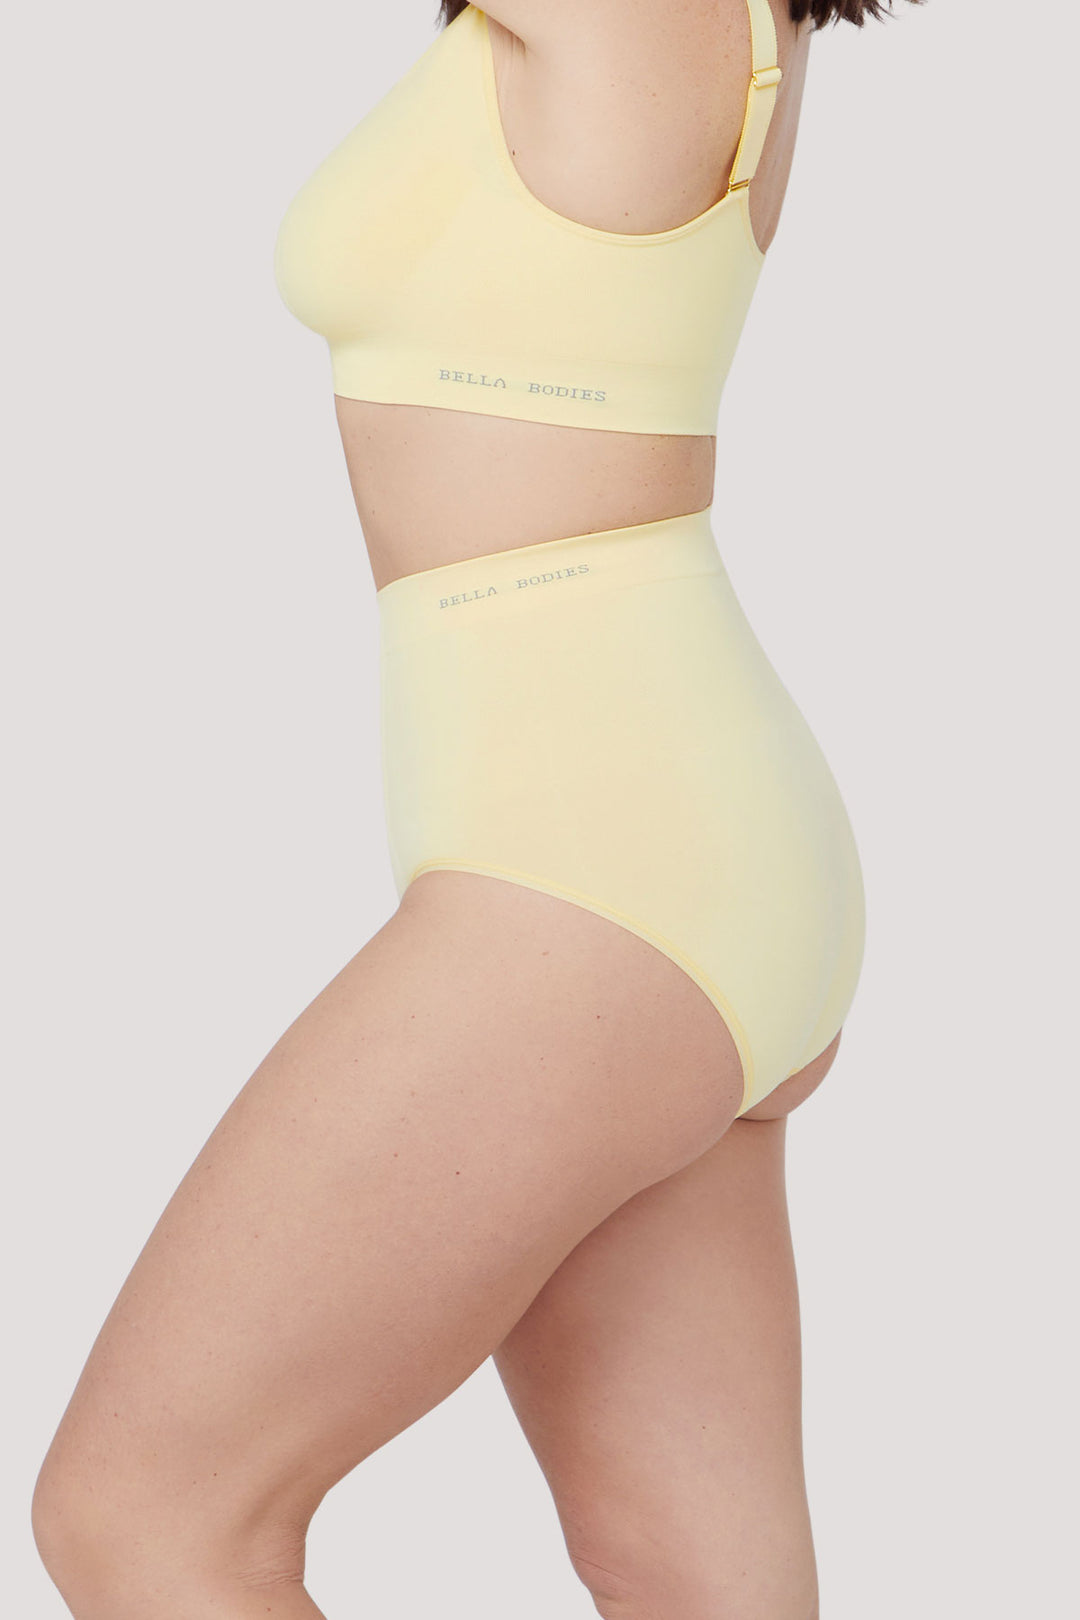 Women's slimming & firming underwear 3 pack | Bella Bodies Australia | Lemon | Side